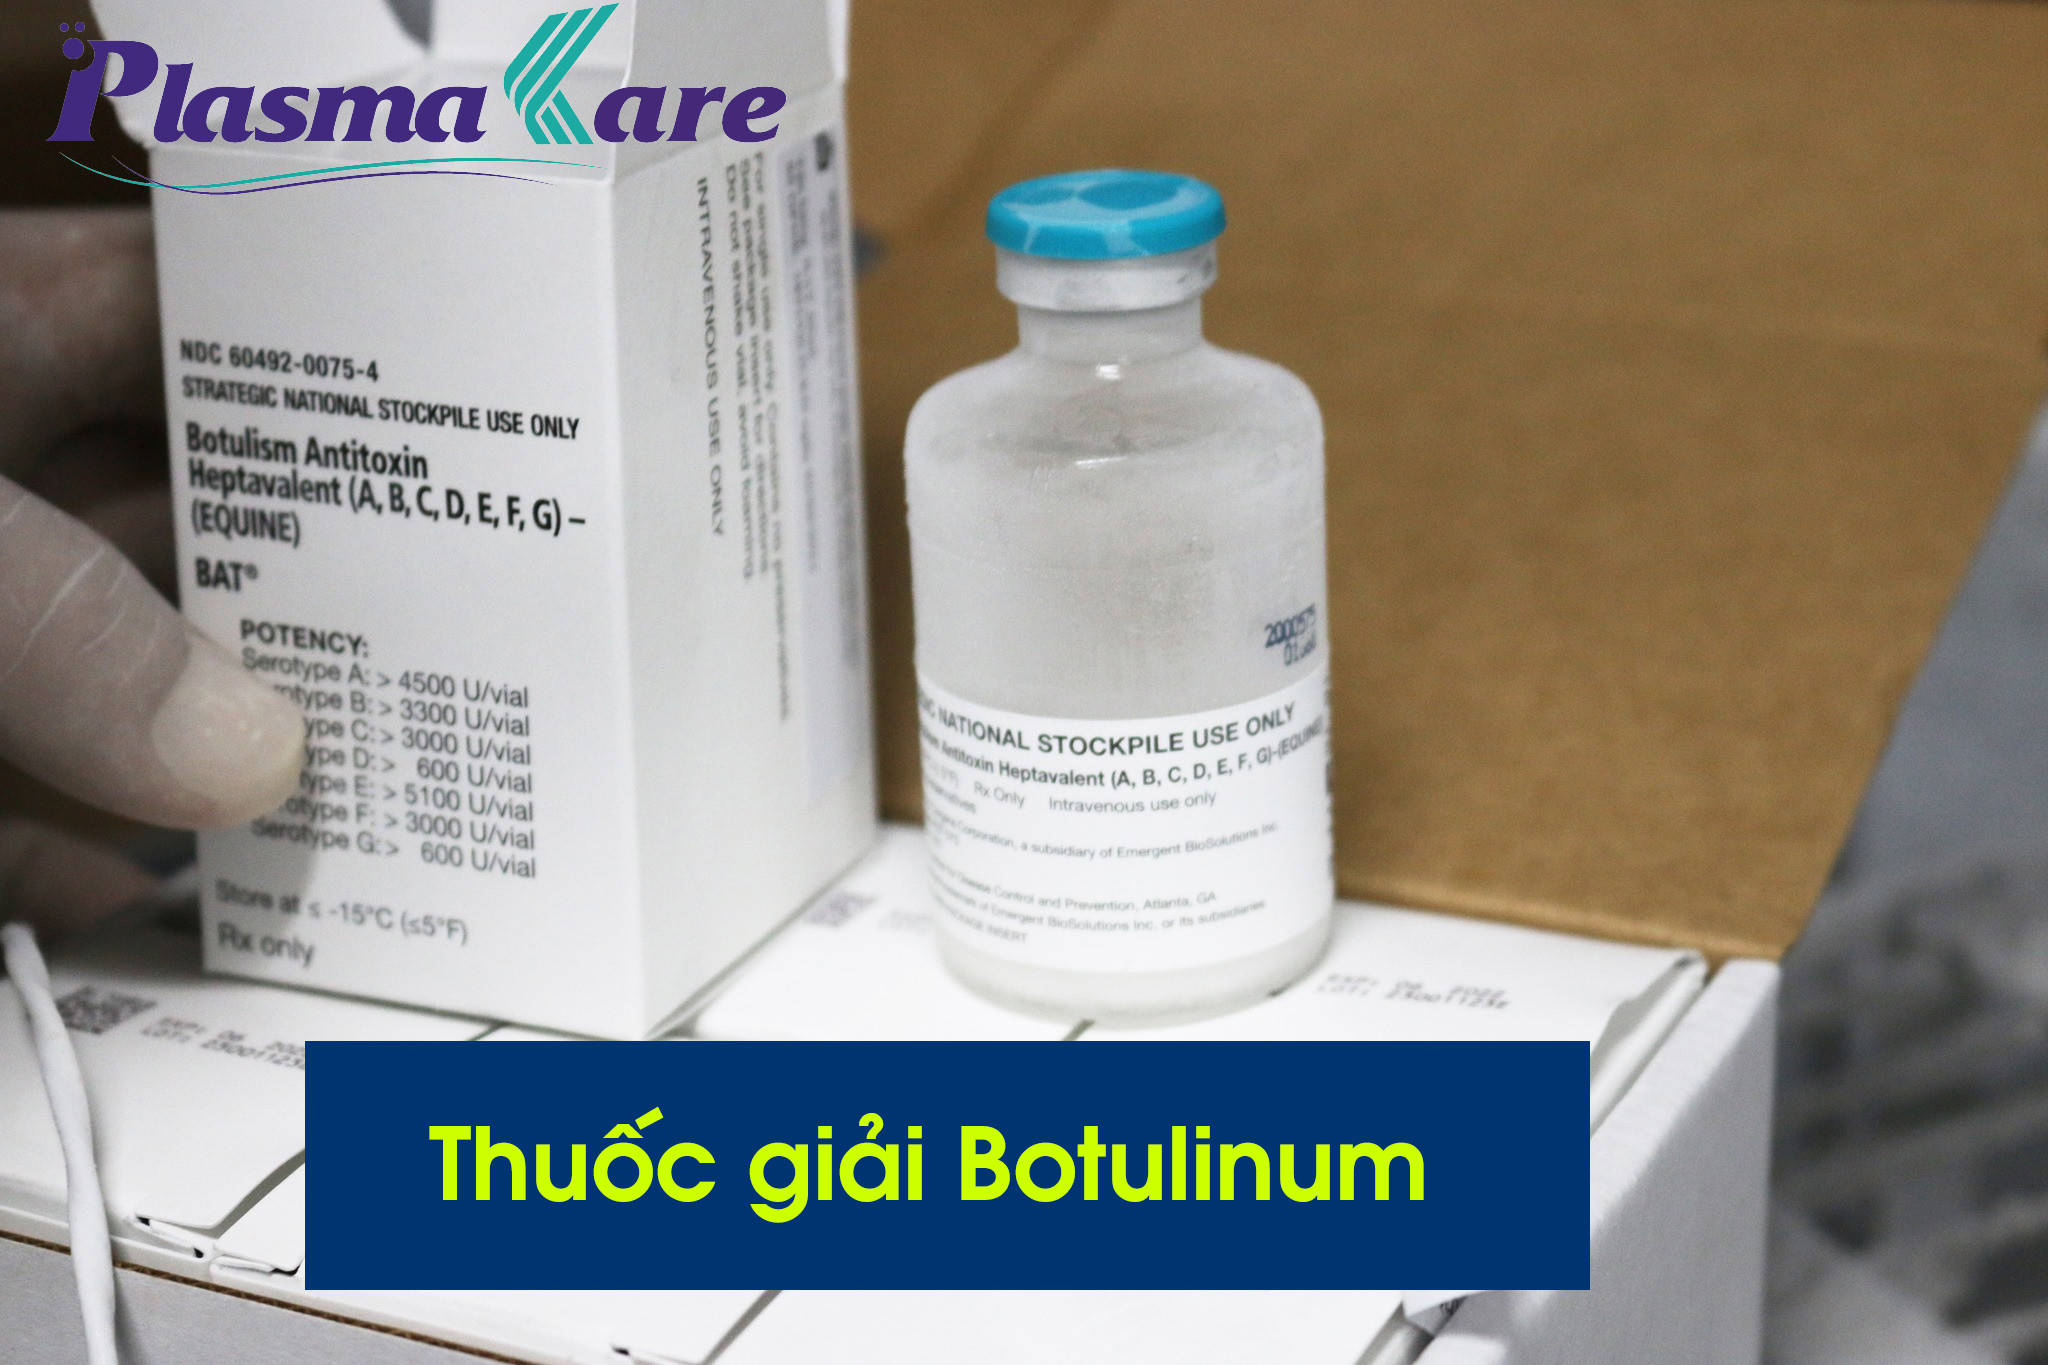 Thuoc-giai-doc-botulinum-29.05